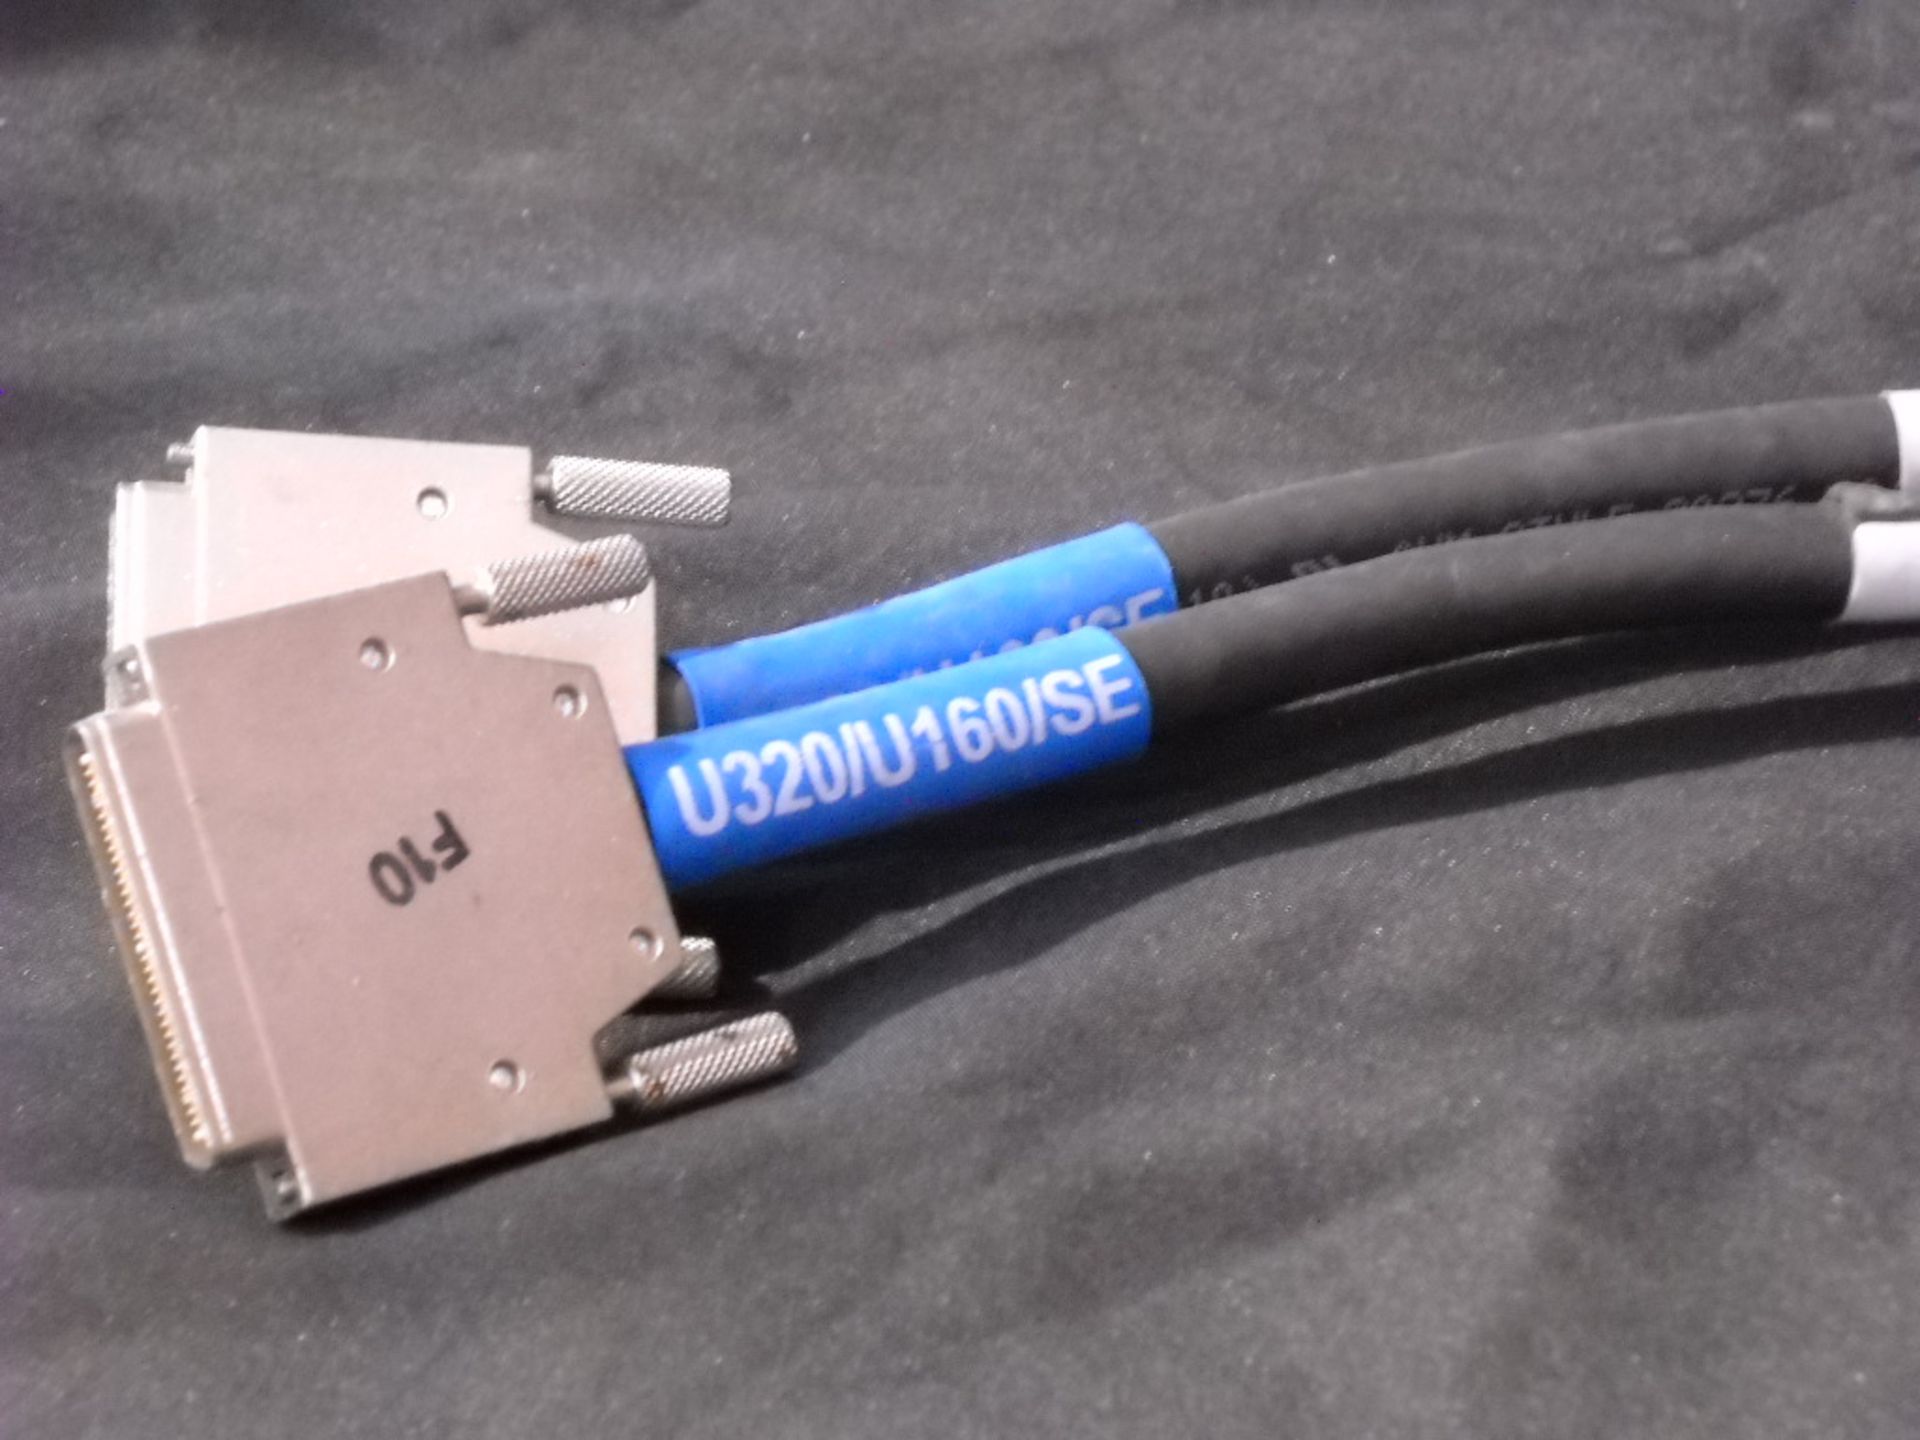 Lot of 2 AVID U320/U160/SE SCSI Cables , Qty 1 , 333151848094 - Image 2 of 6